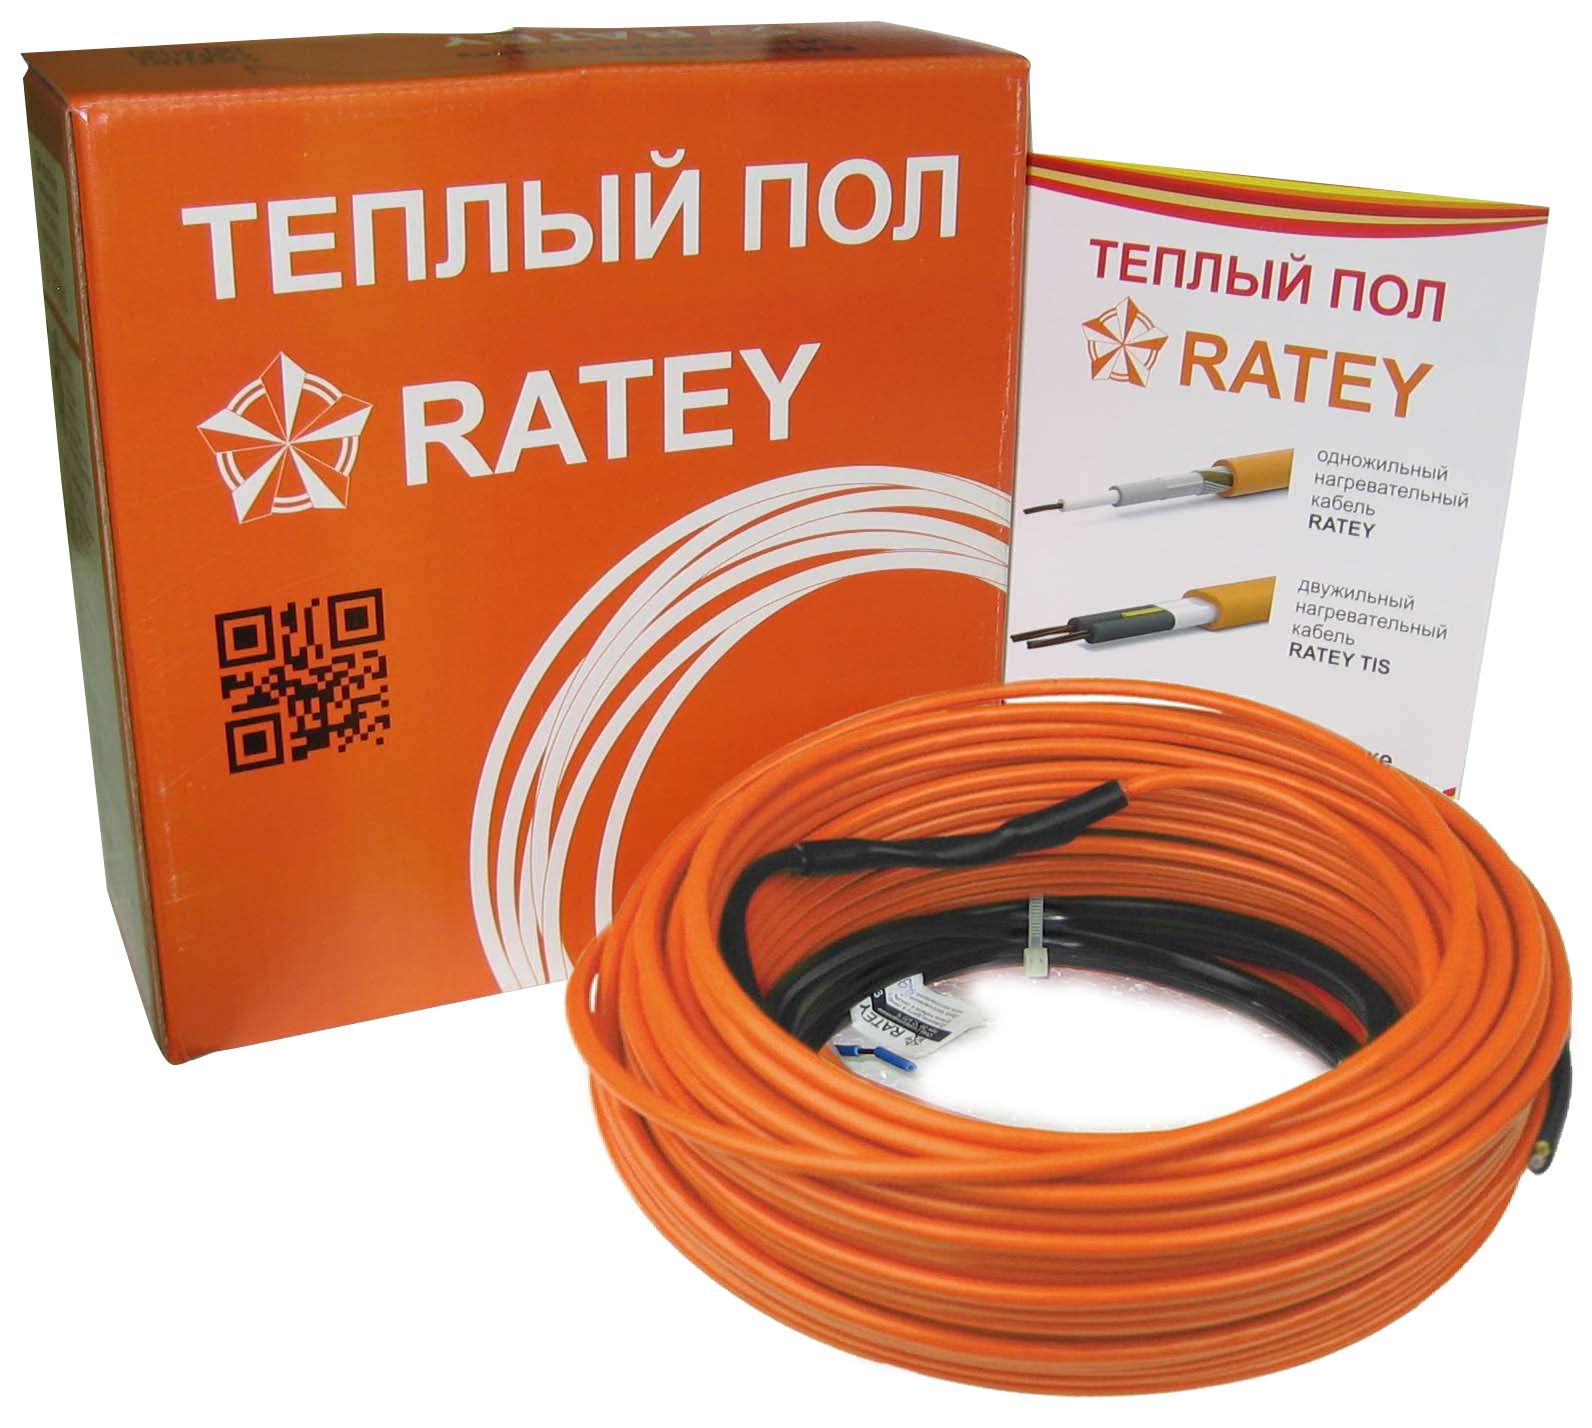 Электрический теплый пол Ratey RD1 0.670